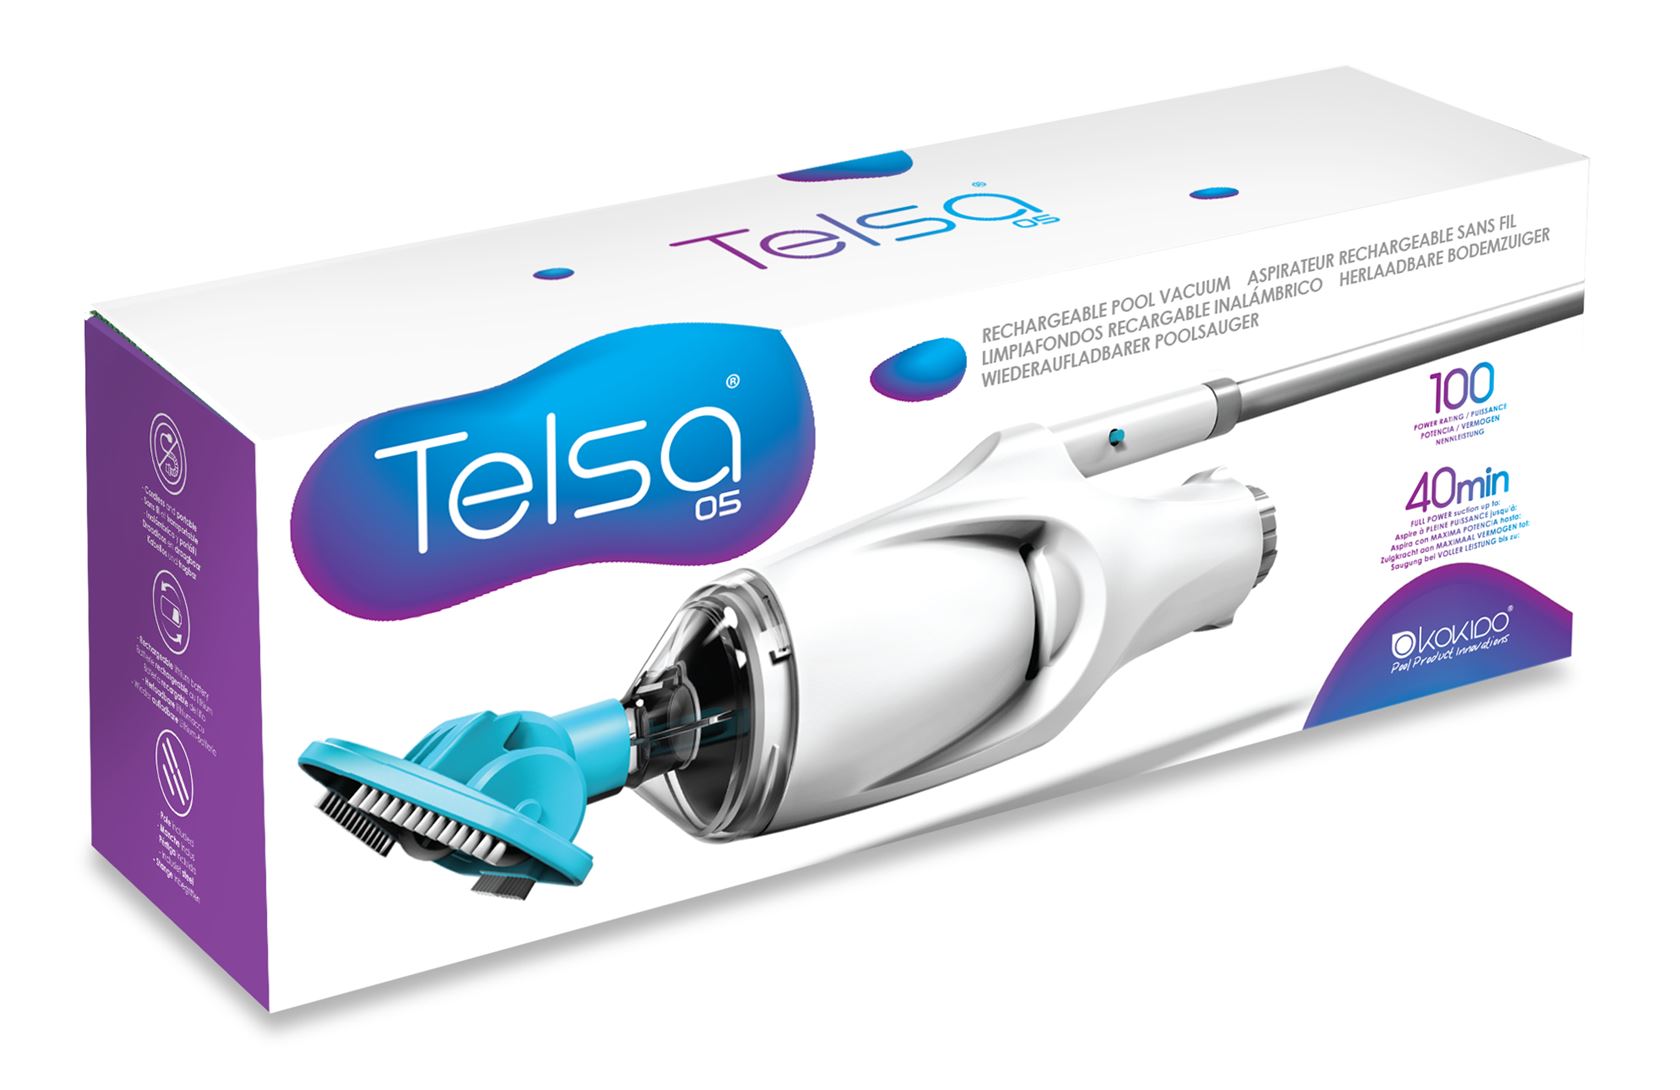 TELSA-5-Rechargeable-Pool-Spa-Vacuum